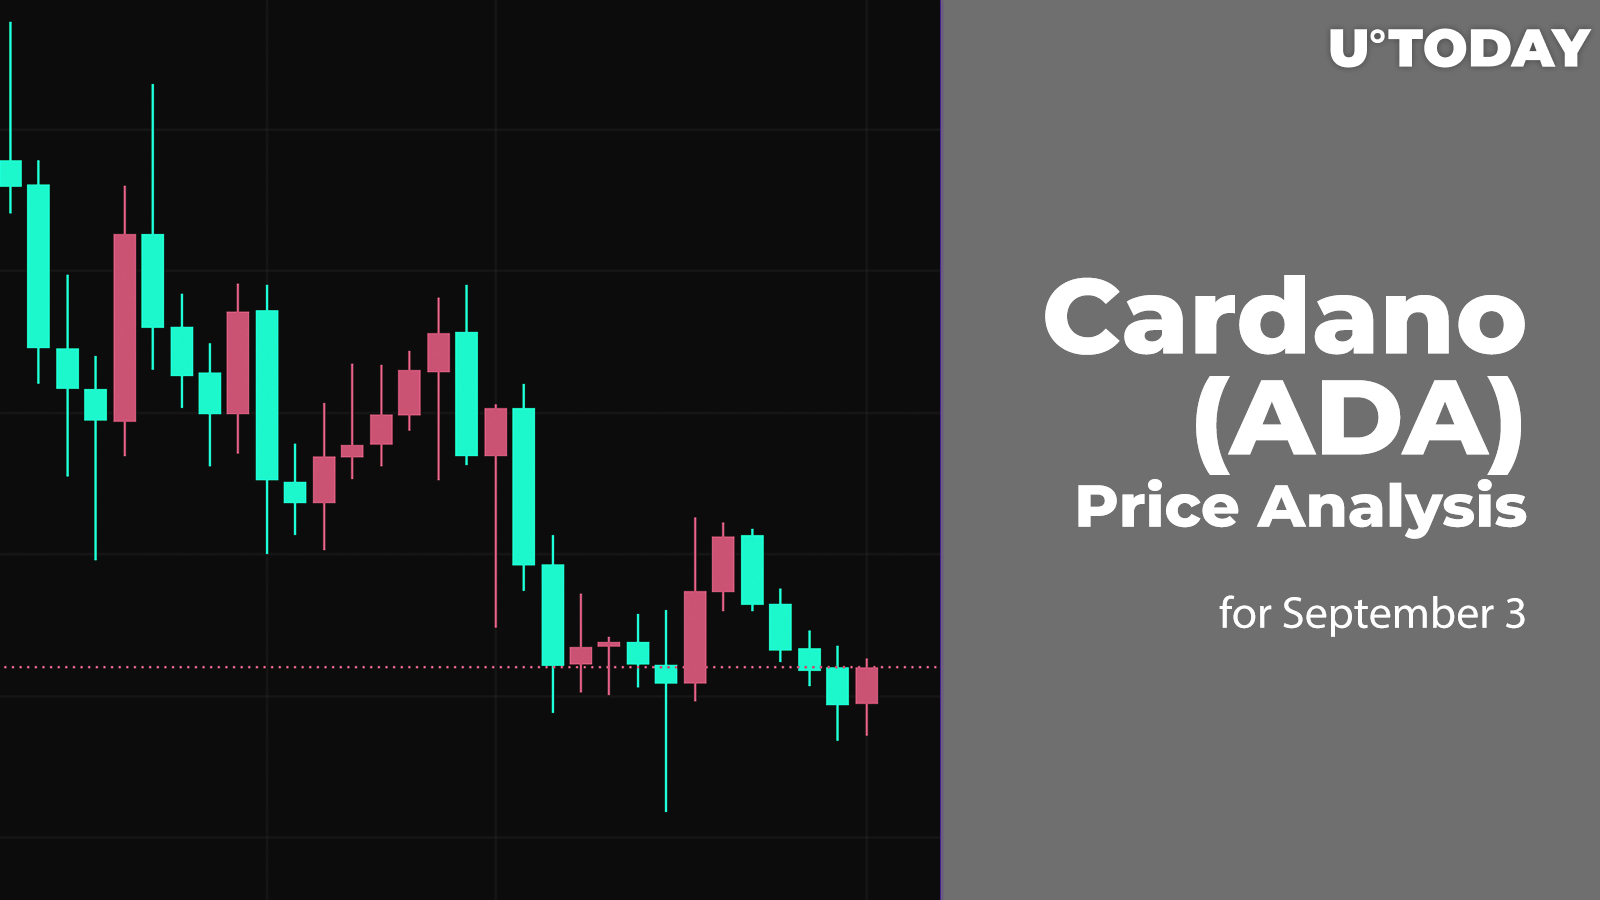 Cardano (ADA) Price Analysis for September 3